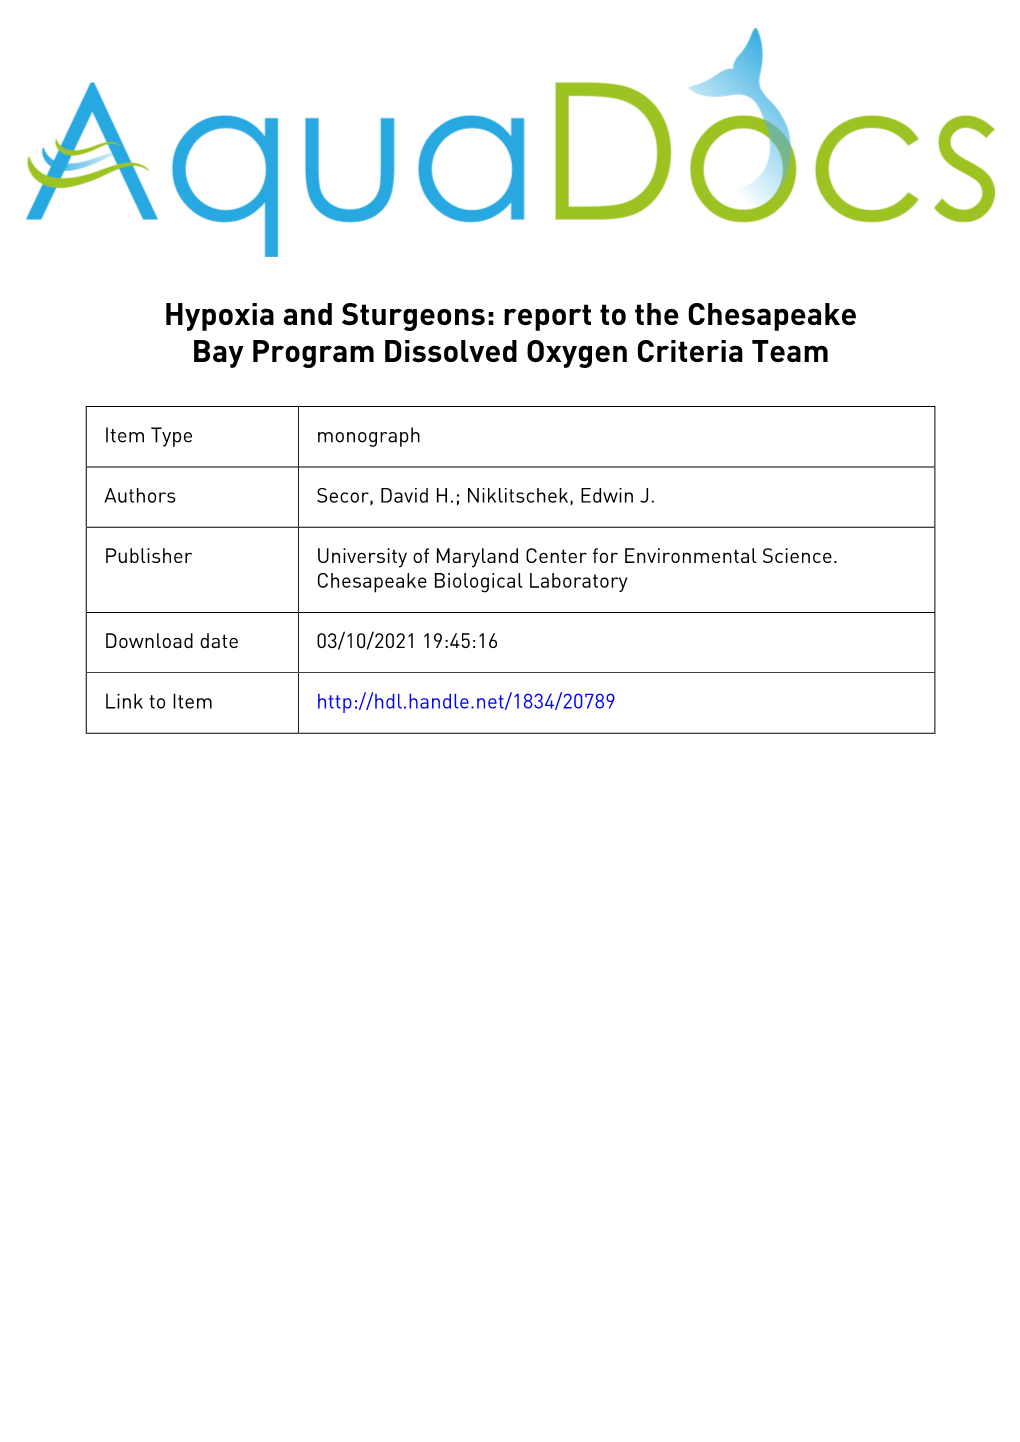 Hypoxia and Sturgeons: Report to the Chesapeake Bay Program Dissolved Oxygen Criteria Team